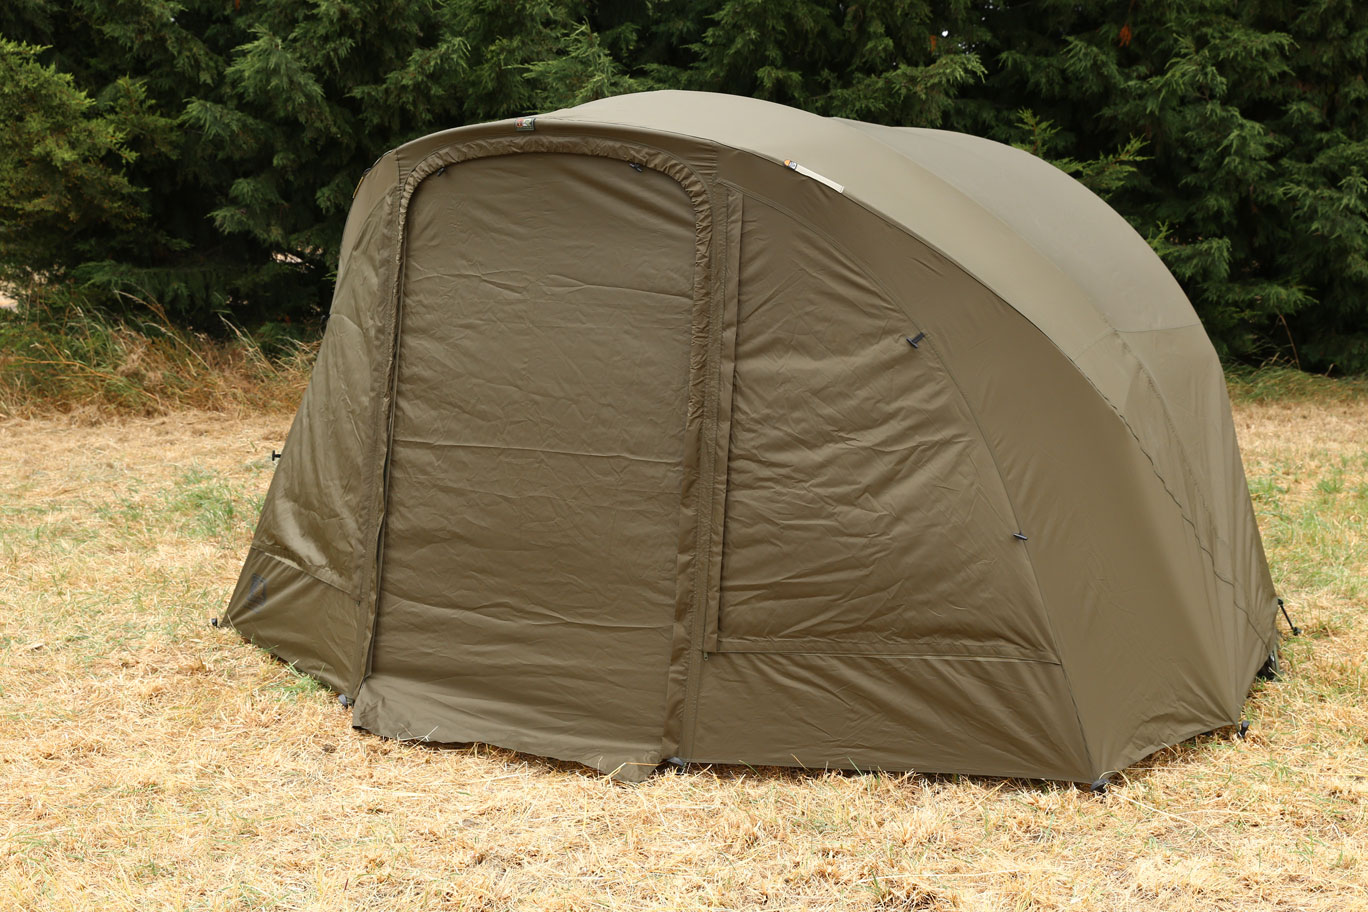 Fox R-Series 1-Man XL Overwrap Shelters